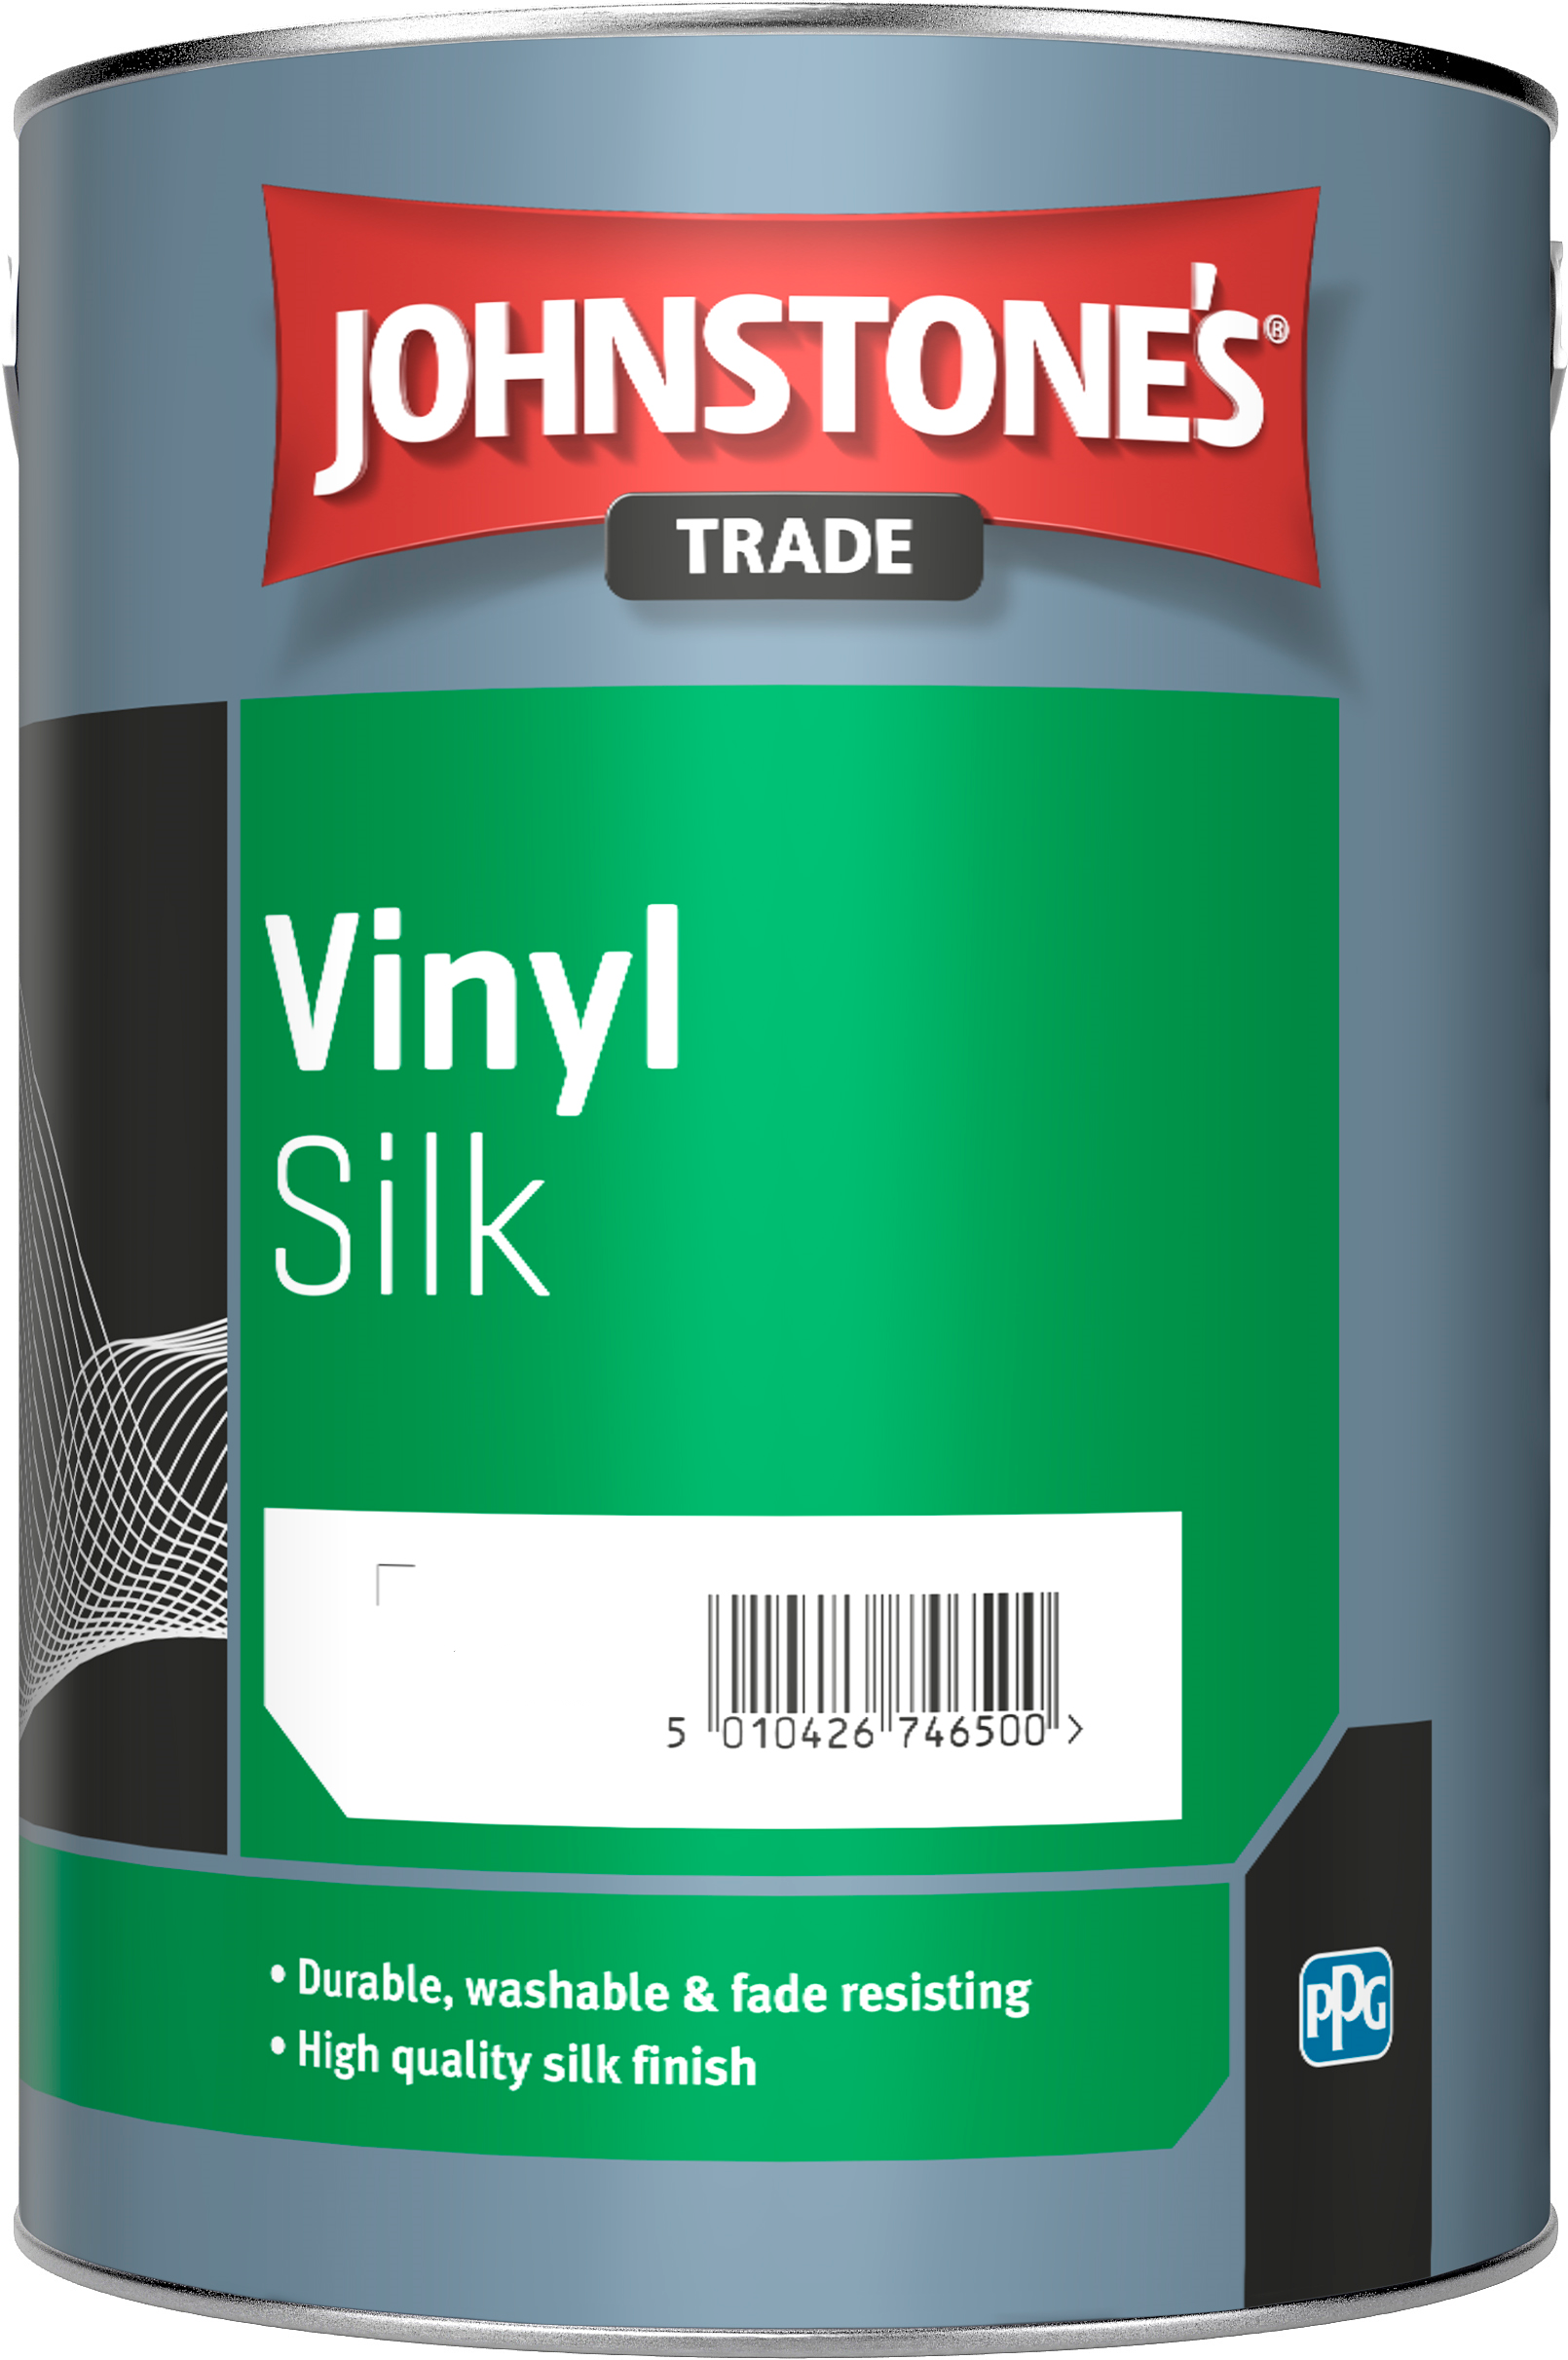 Johnstones Vinyl Silk - Brilliant White